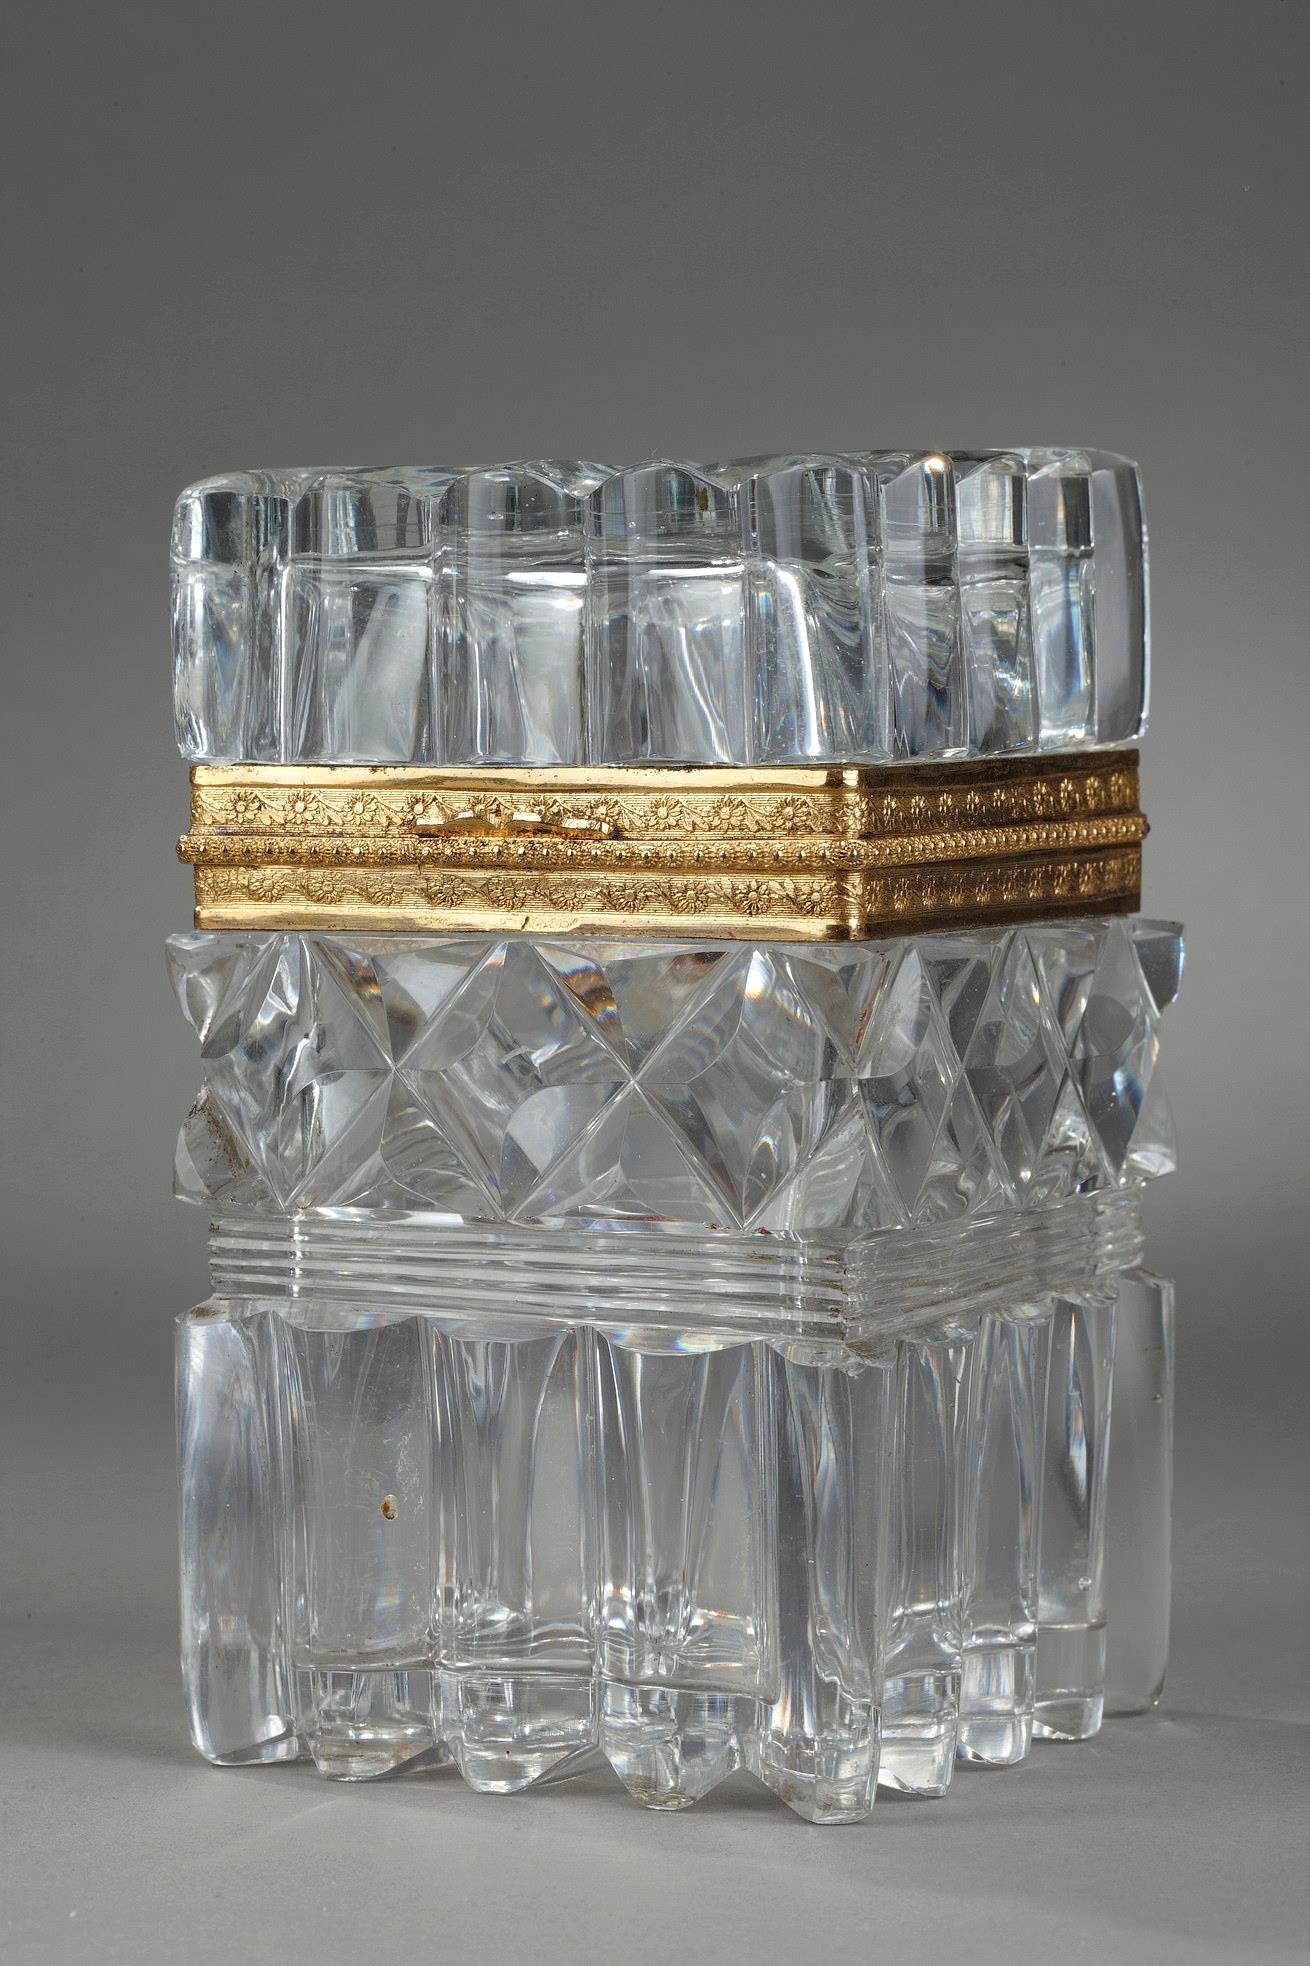 cut-crystal, box, jewellery box, gold, mounted, bronze, gilt, 19th, century, Restauration, Charles X